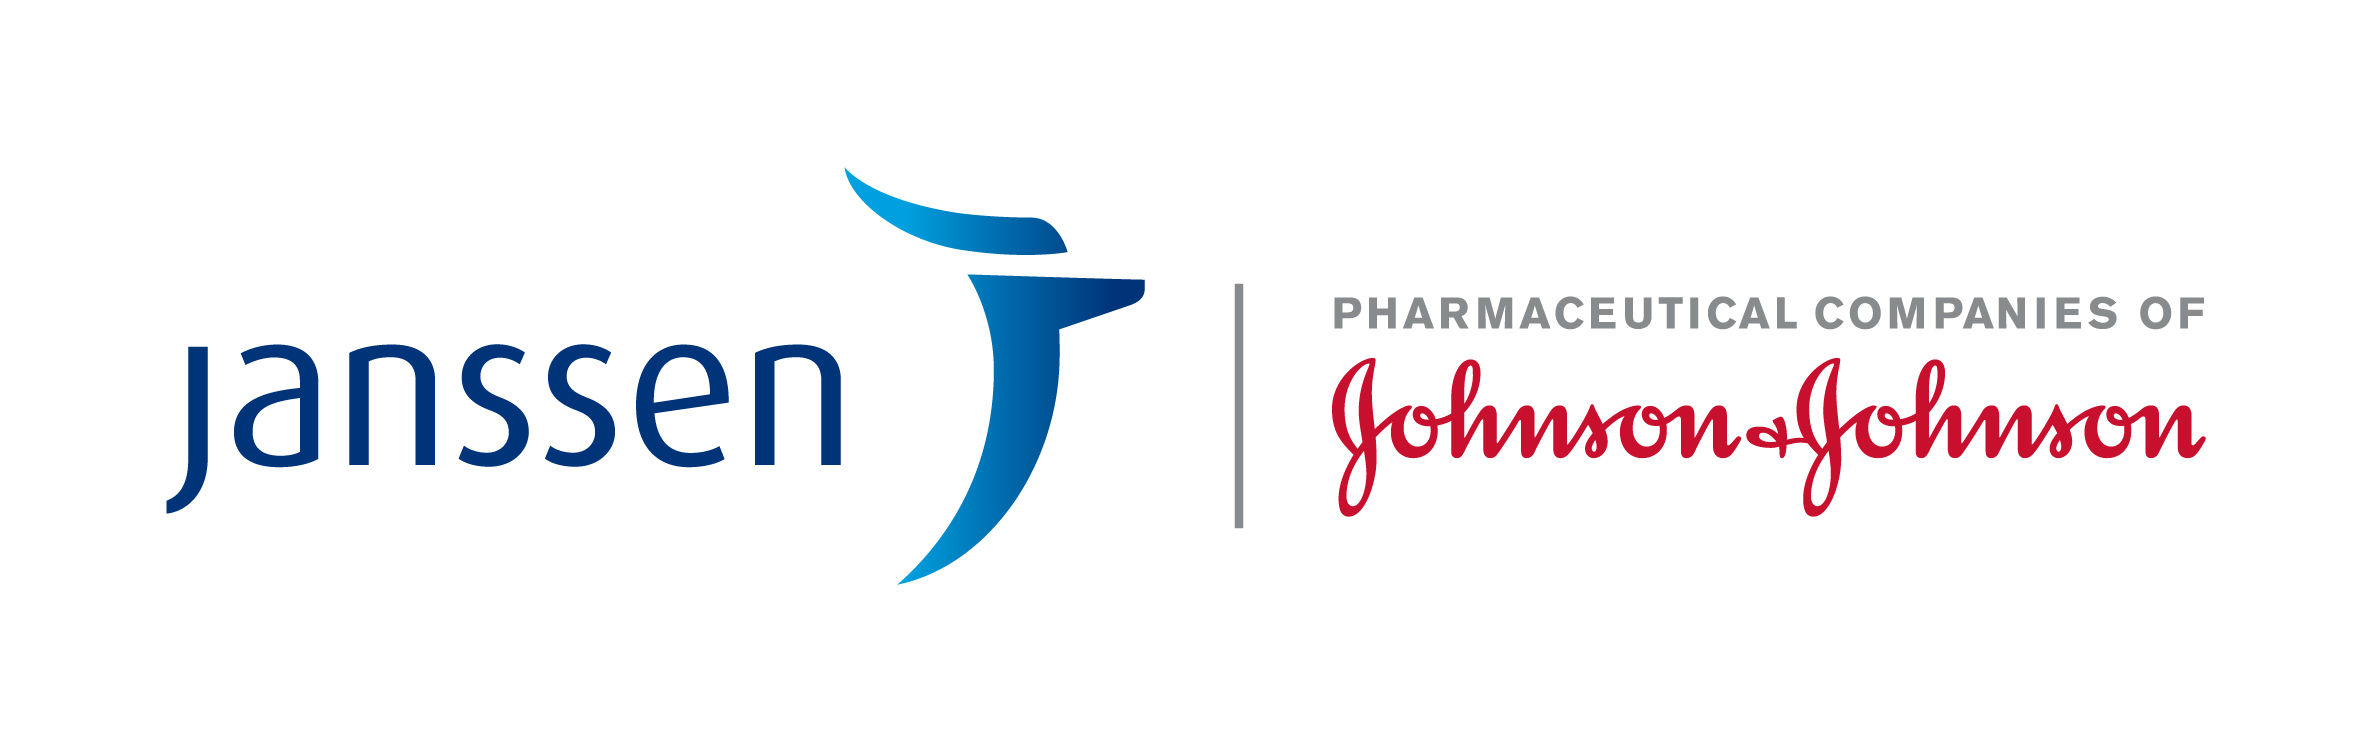 Janssen Companiile Farmaceutice ale Johnson & Johnson in Romania